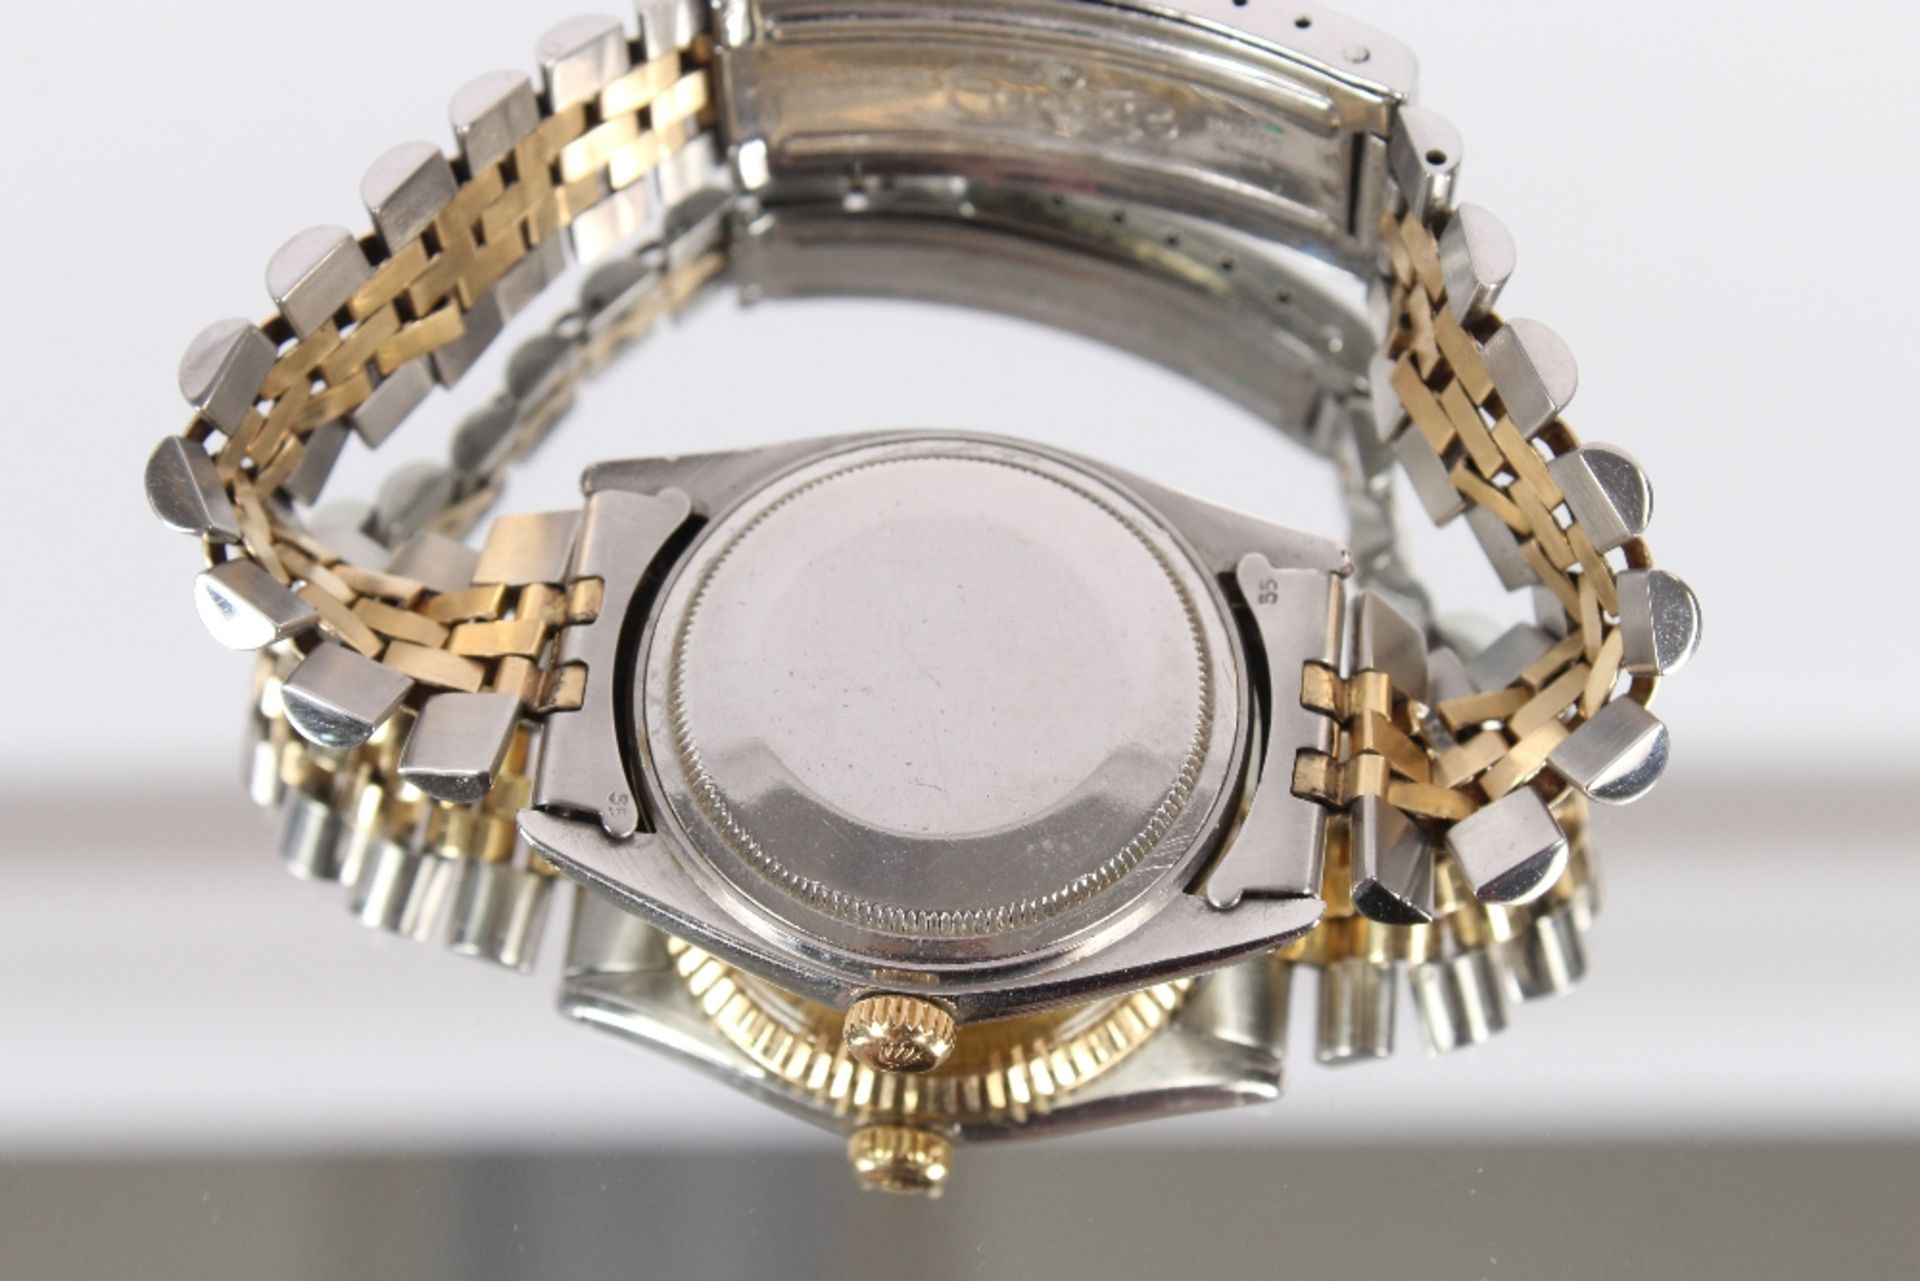 A Rolex Bi-Metallic date adjust Oyster Perpetual wrist watch - Image 9 of 9